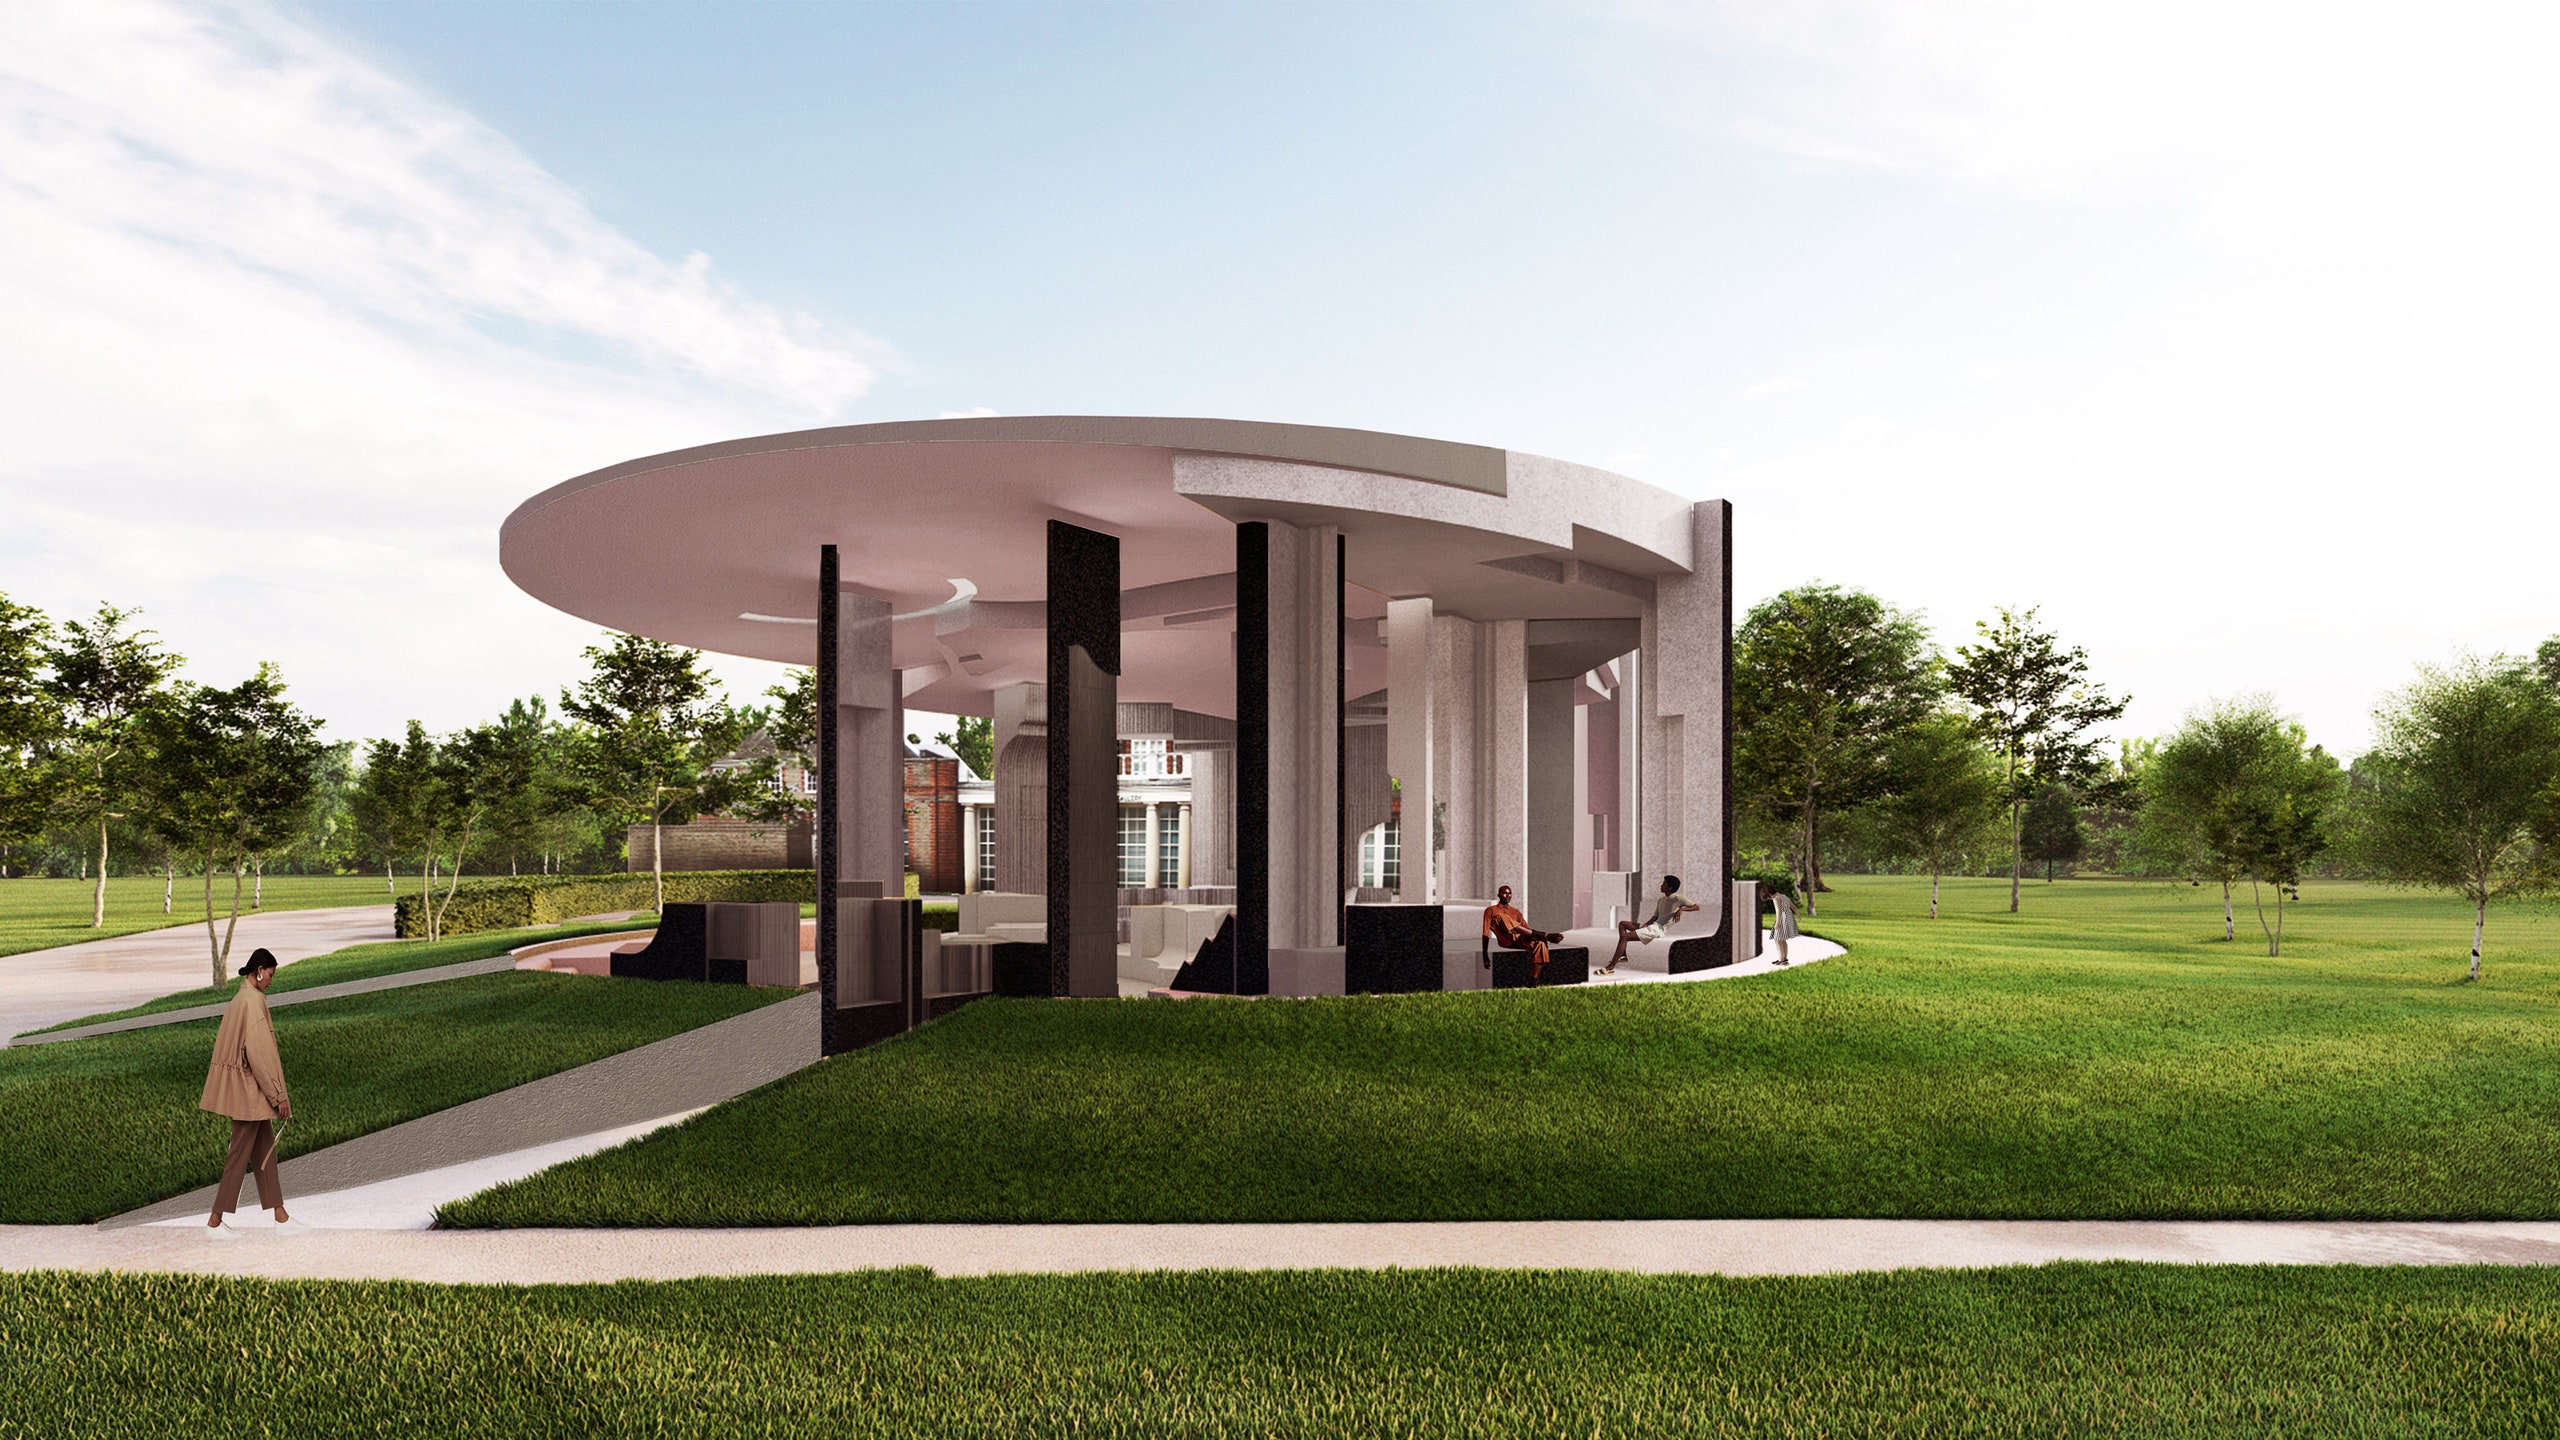 Студия Counterspace построит павильон галереи Серпентайн в 2020 году